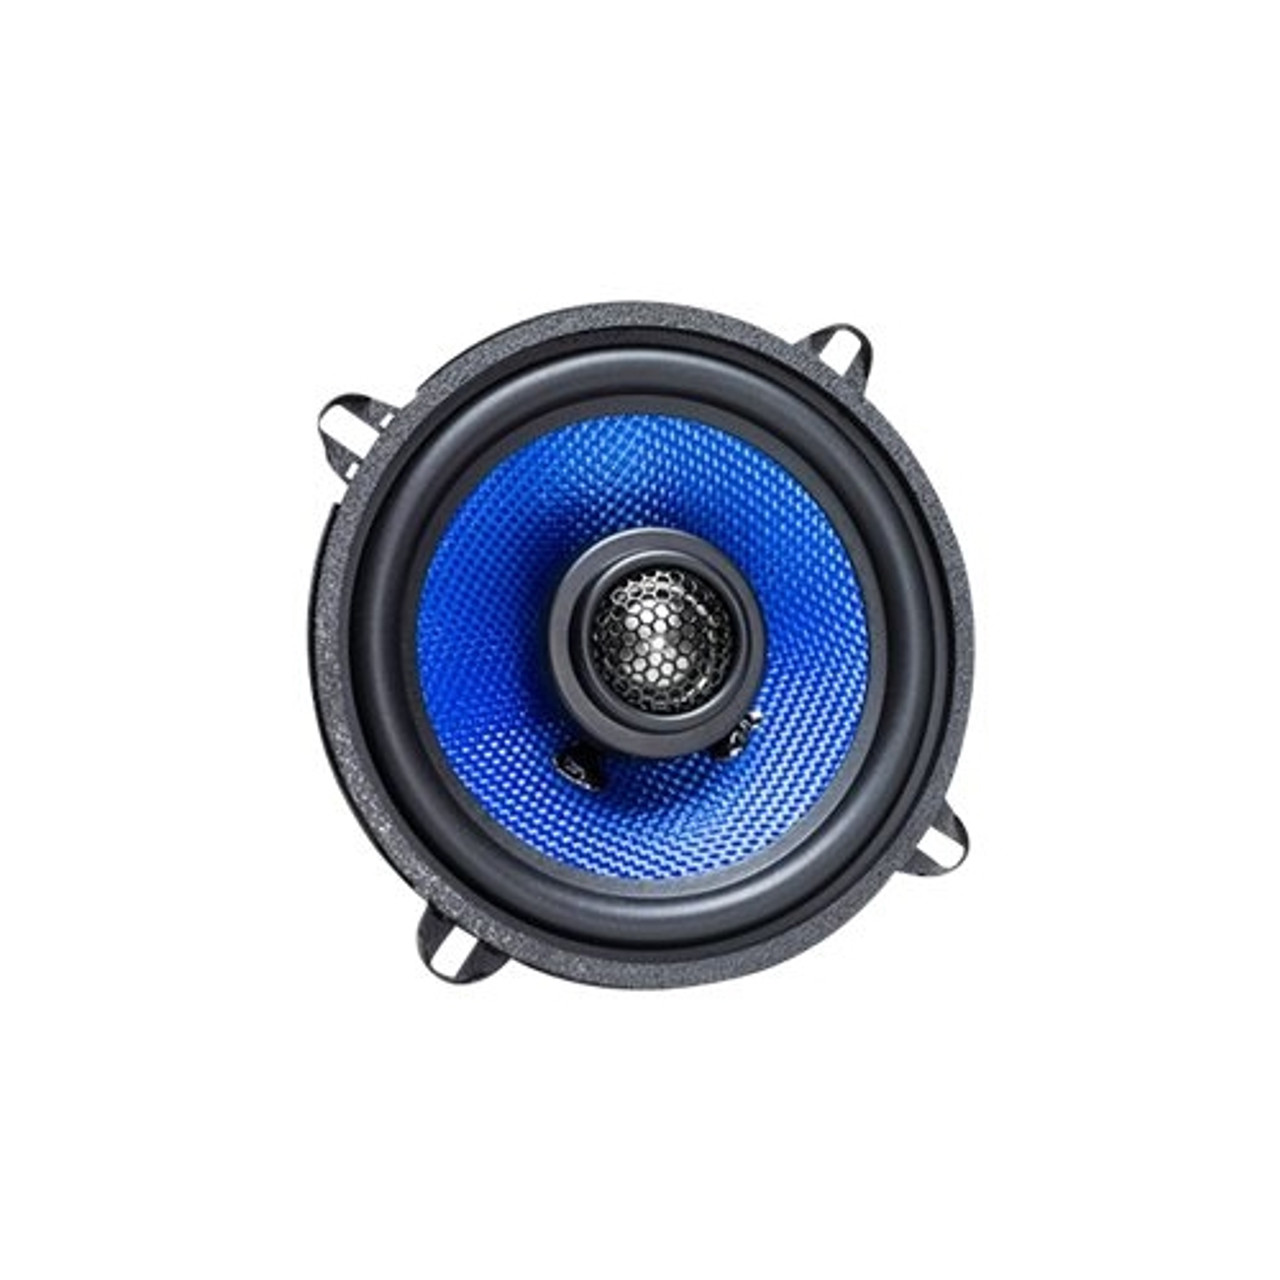 Hifonics - Alpha 5-1/4" 2-Way Car Speakers with Woven Glass Fiber Composite Cones (Pair) - Blue/Black